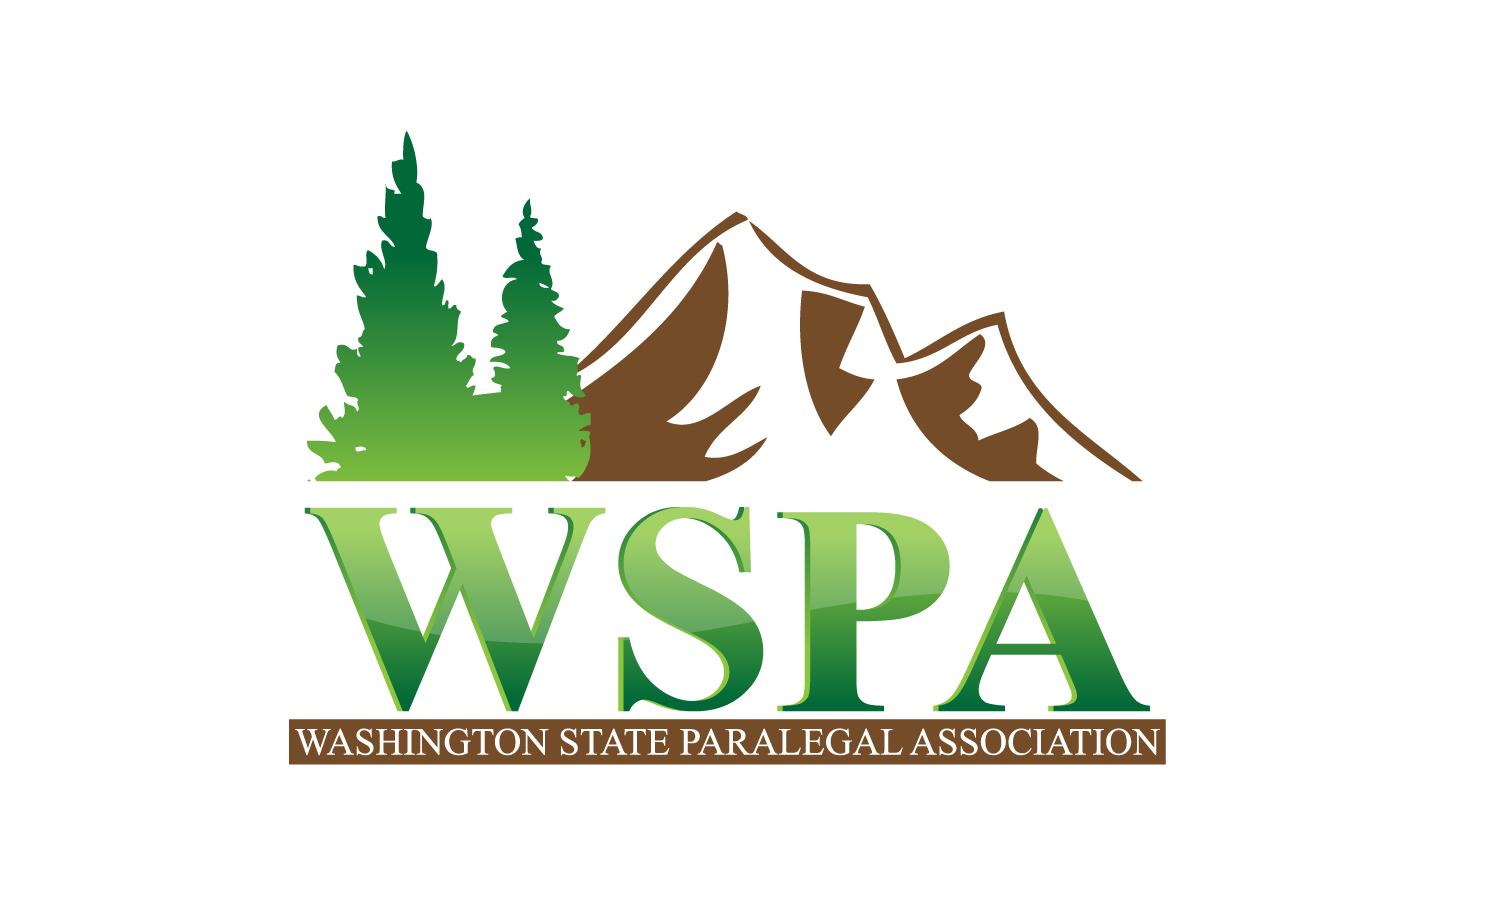 Washington State Paralegal Association - Home